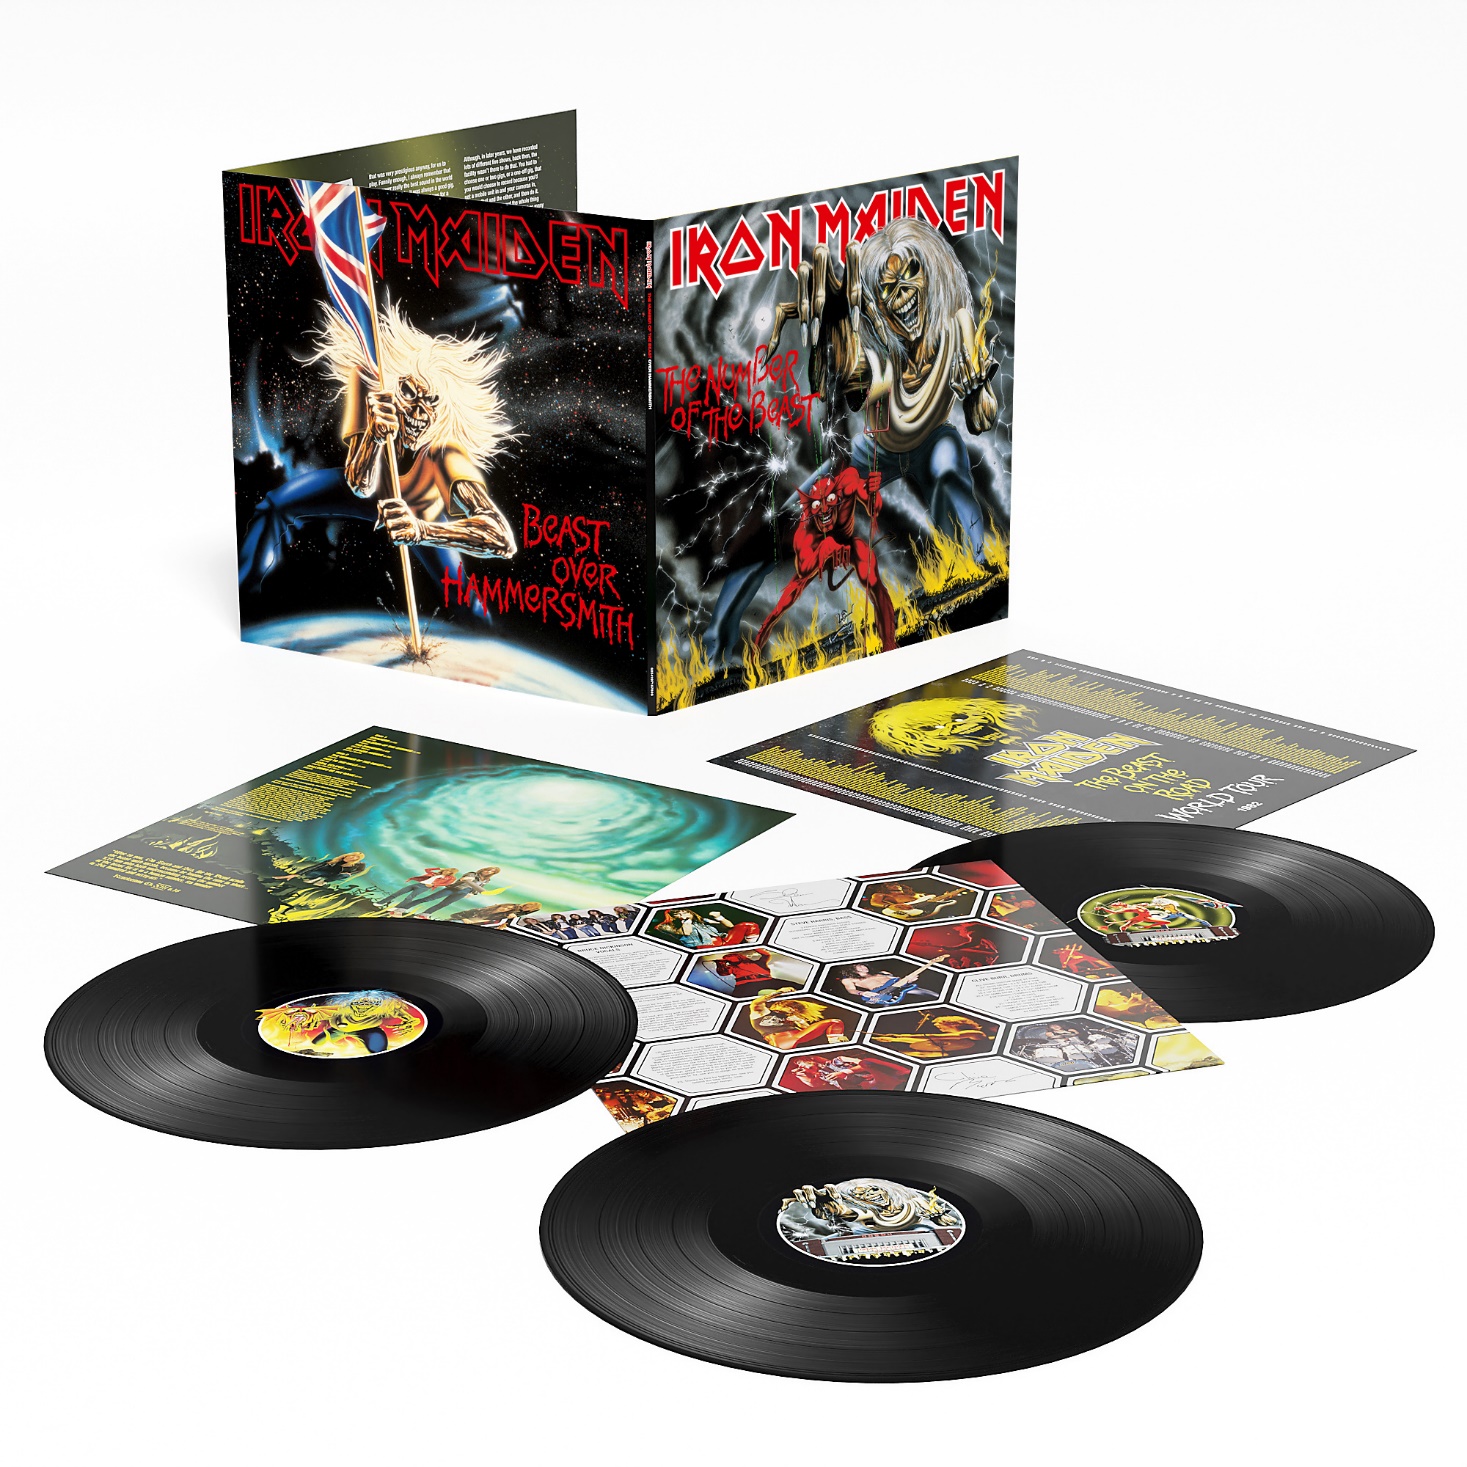 Iron Maiden - Number of the beast (40th ann) Ltd Gatefold - 3 x LP